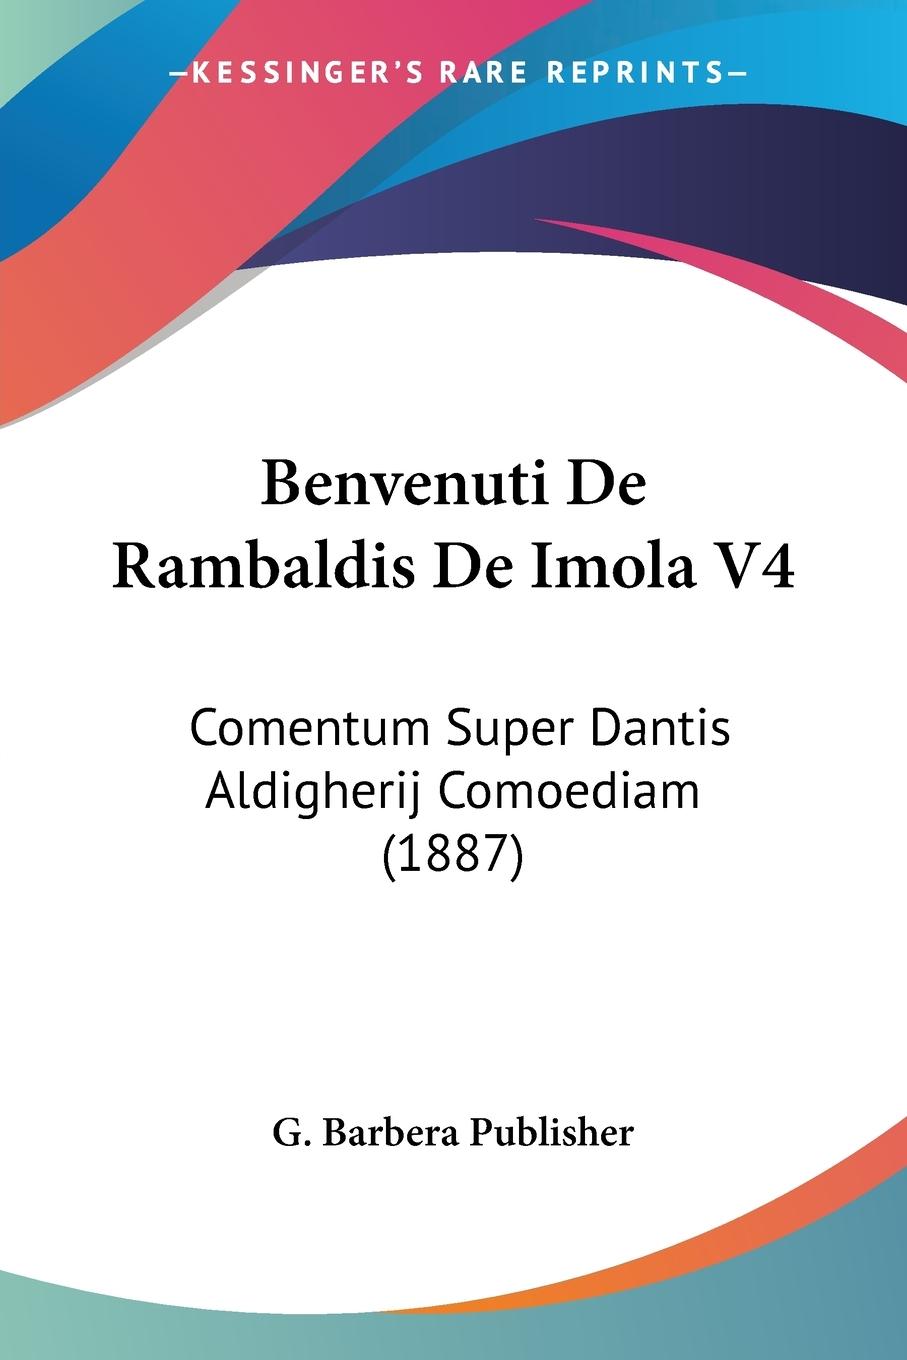 Benvenuti De Rambaldis De Imola V4 - G. Barbera Publisher